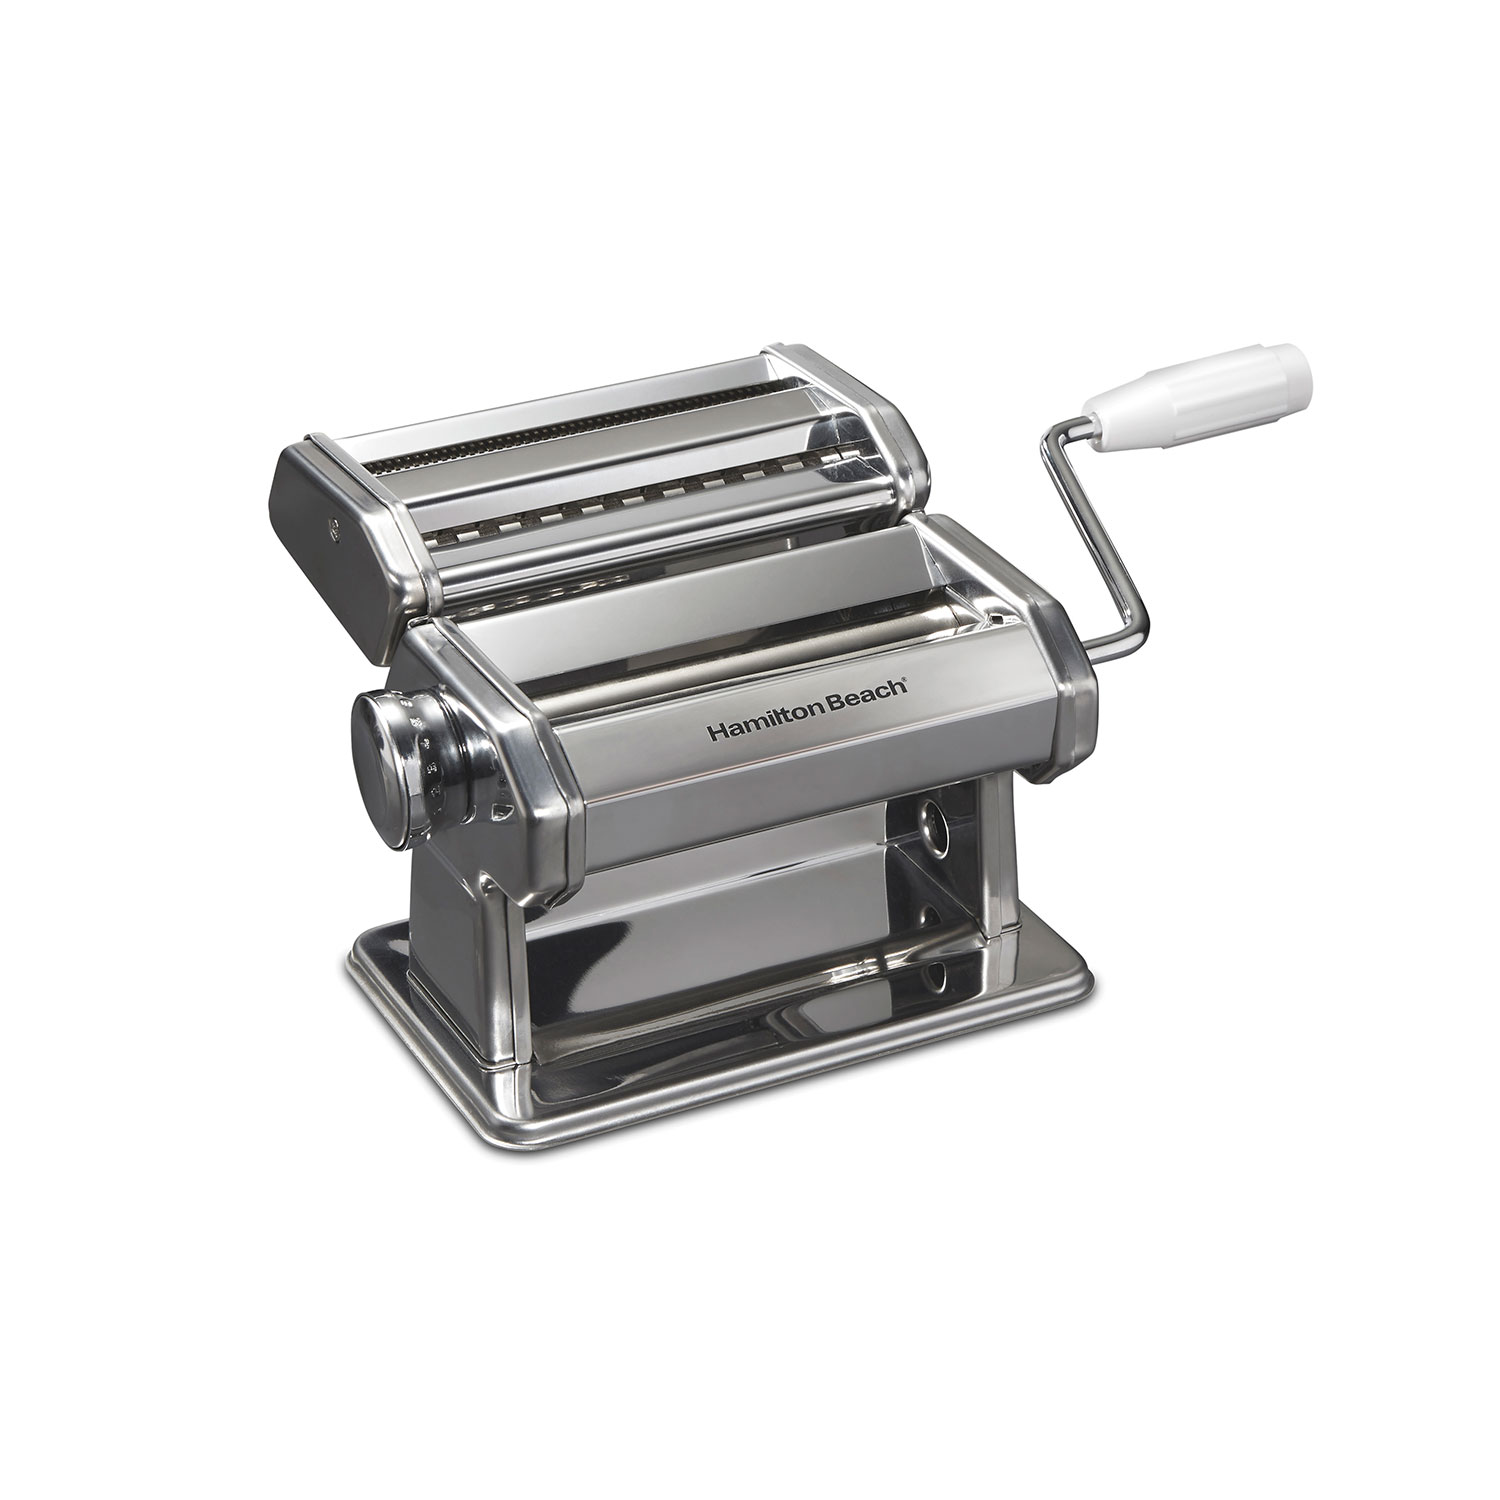 Traditional Pasta Machine, Silver (86655)